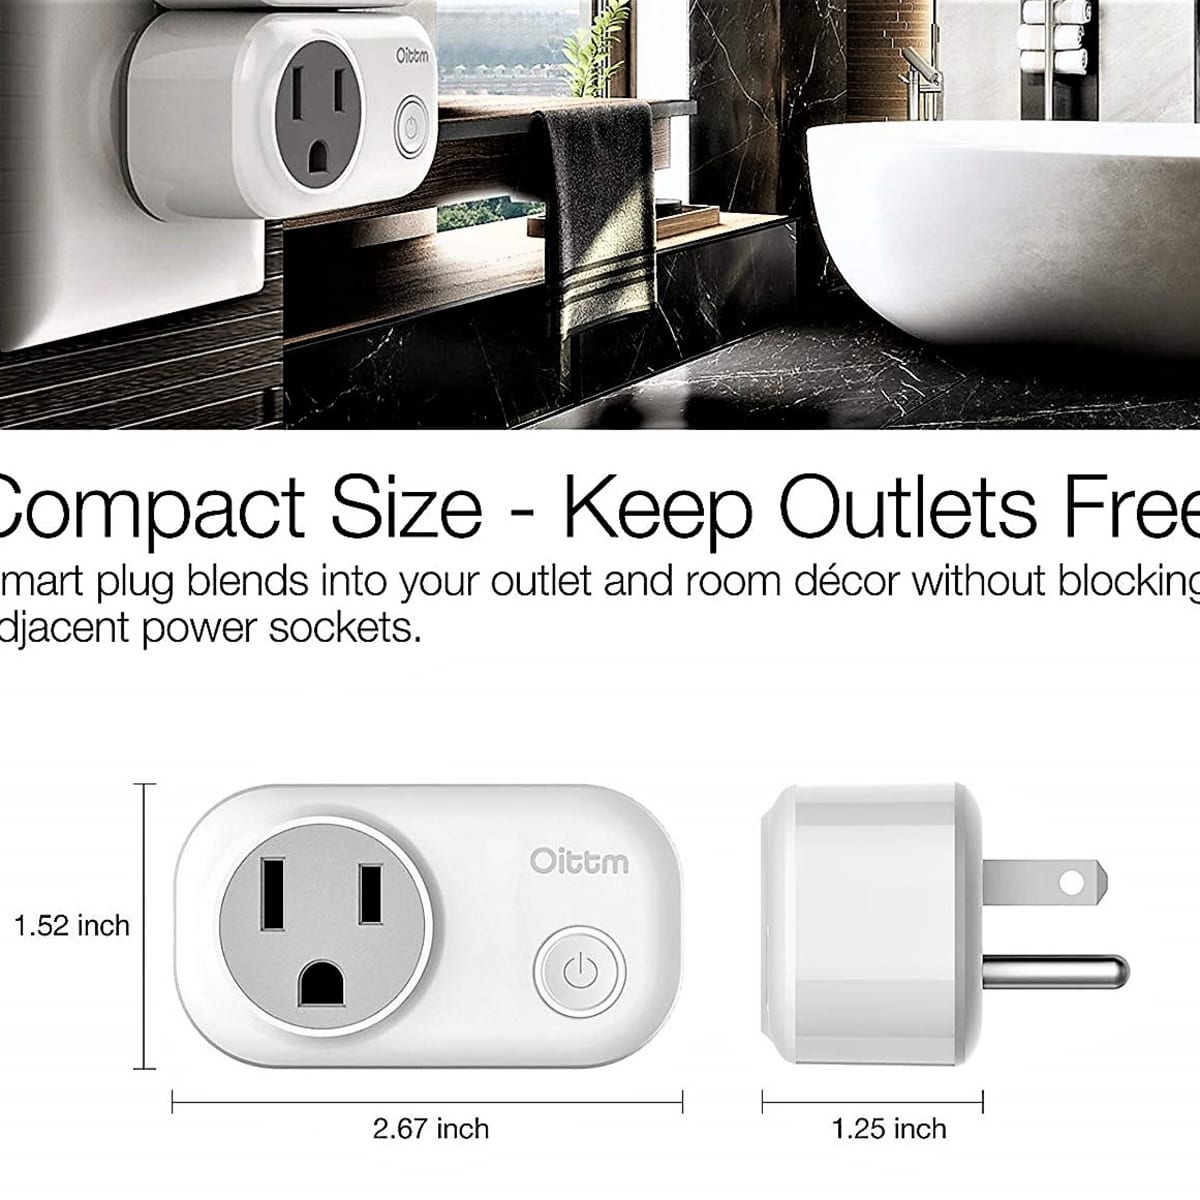 TP-Link's Kasa Smart Wi-Fi Plug tracks your energy consumption - CNET